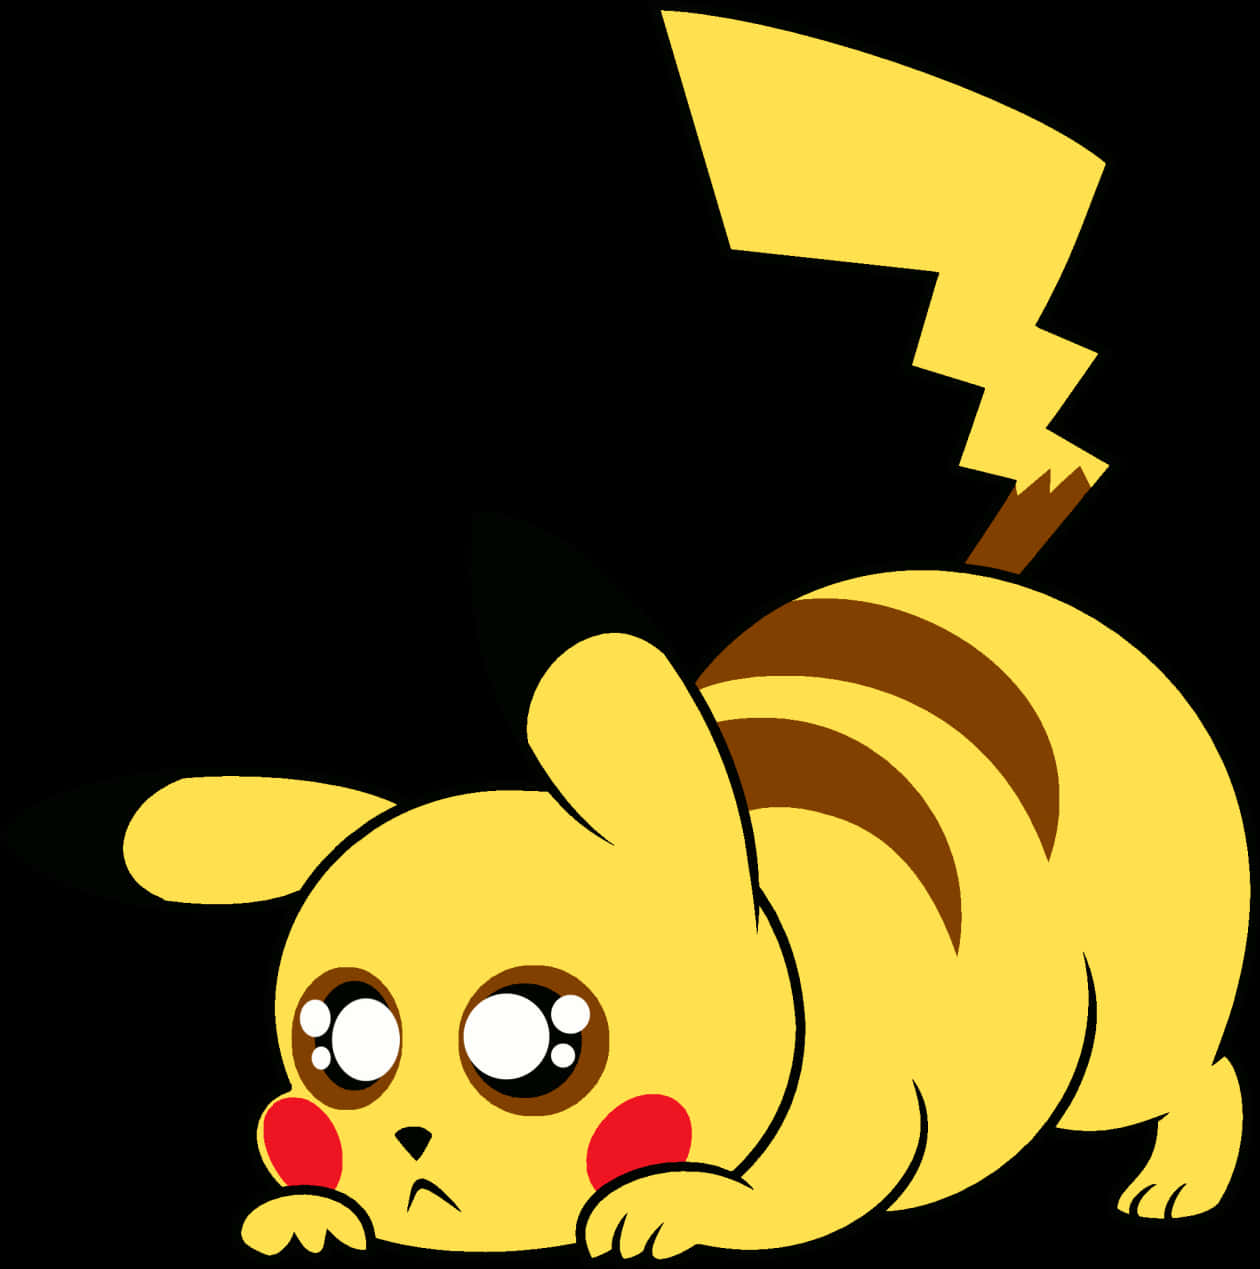 A Cartoon Of A Yellow Dog